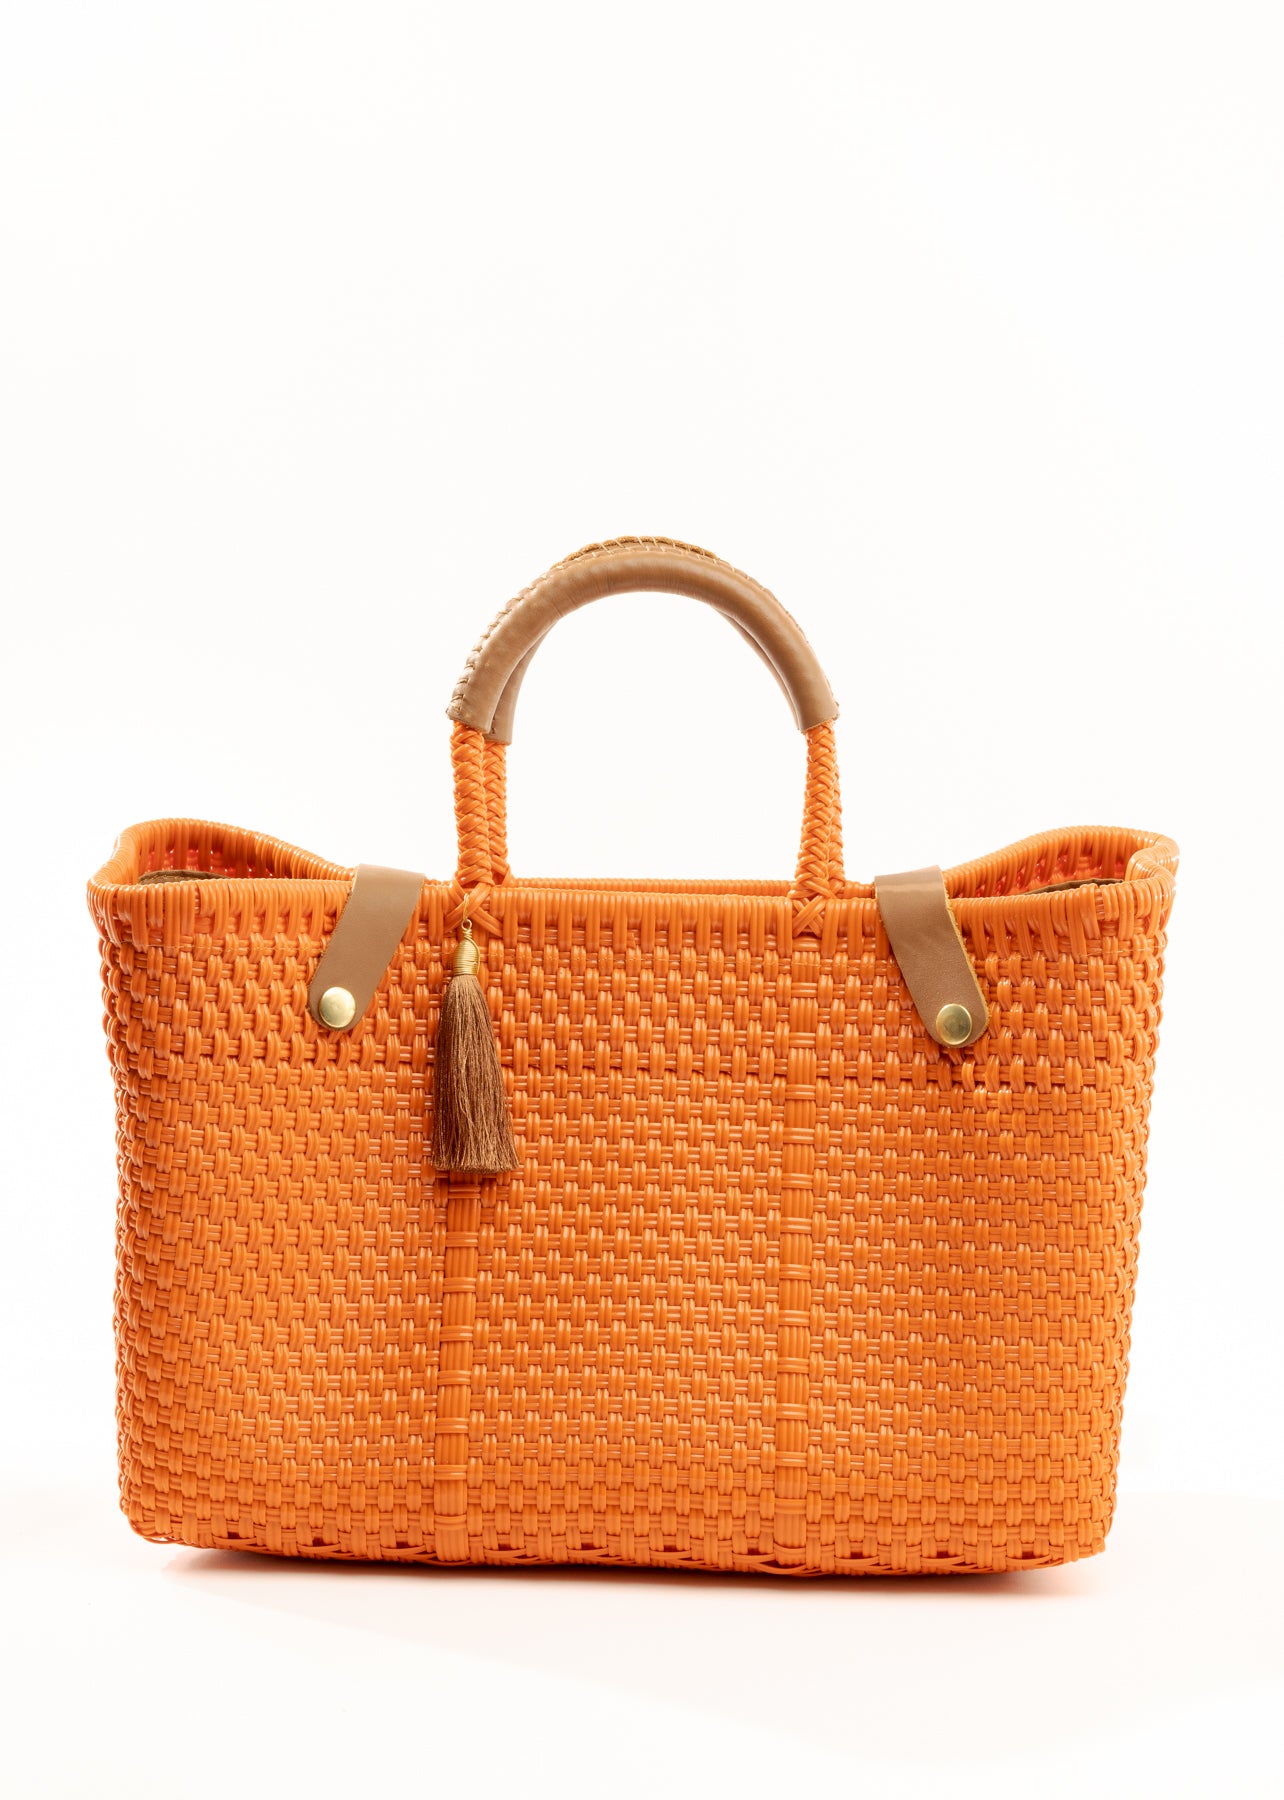 Orange woven handbag with tan leather handle, closure straps, and tassel